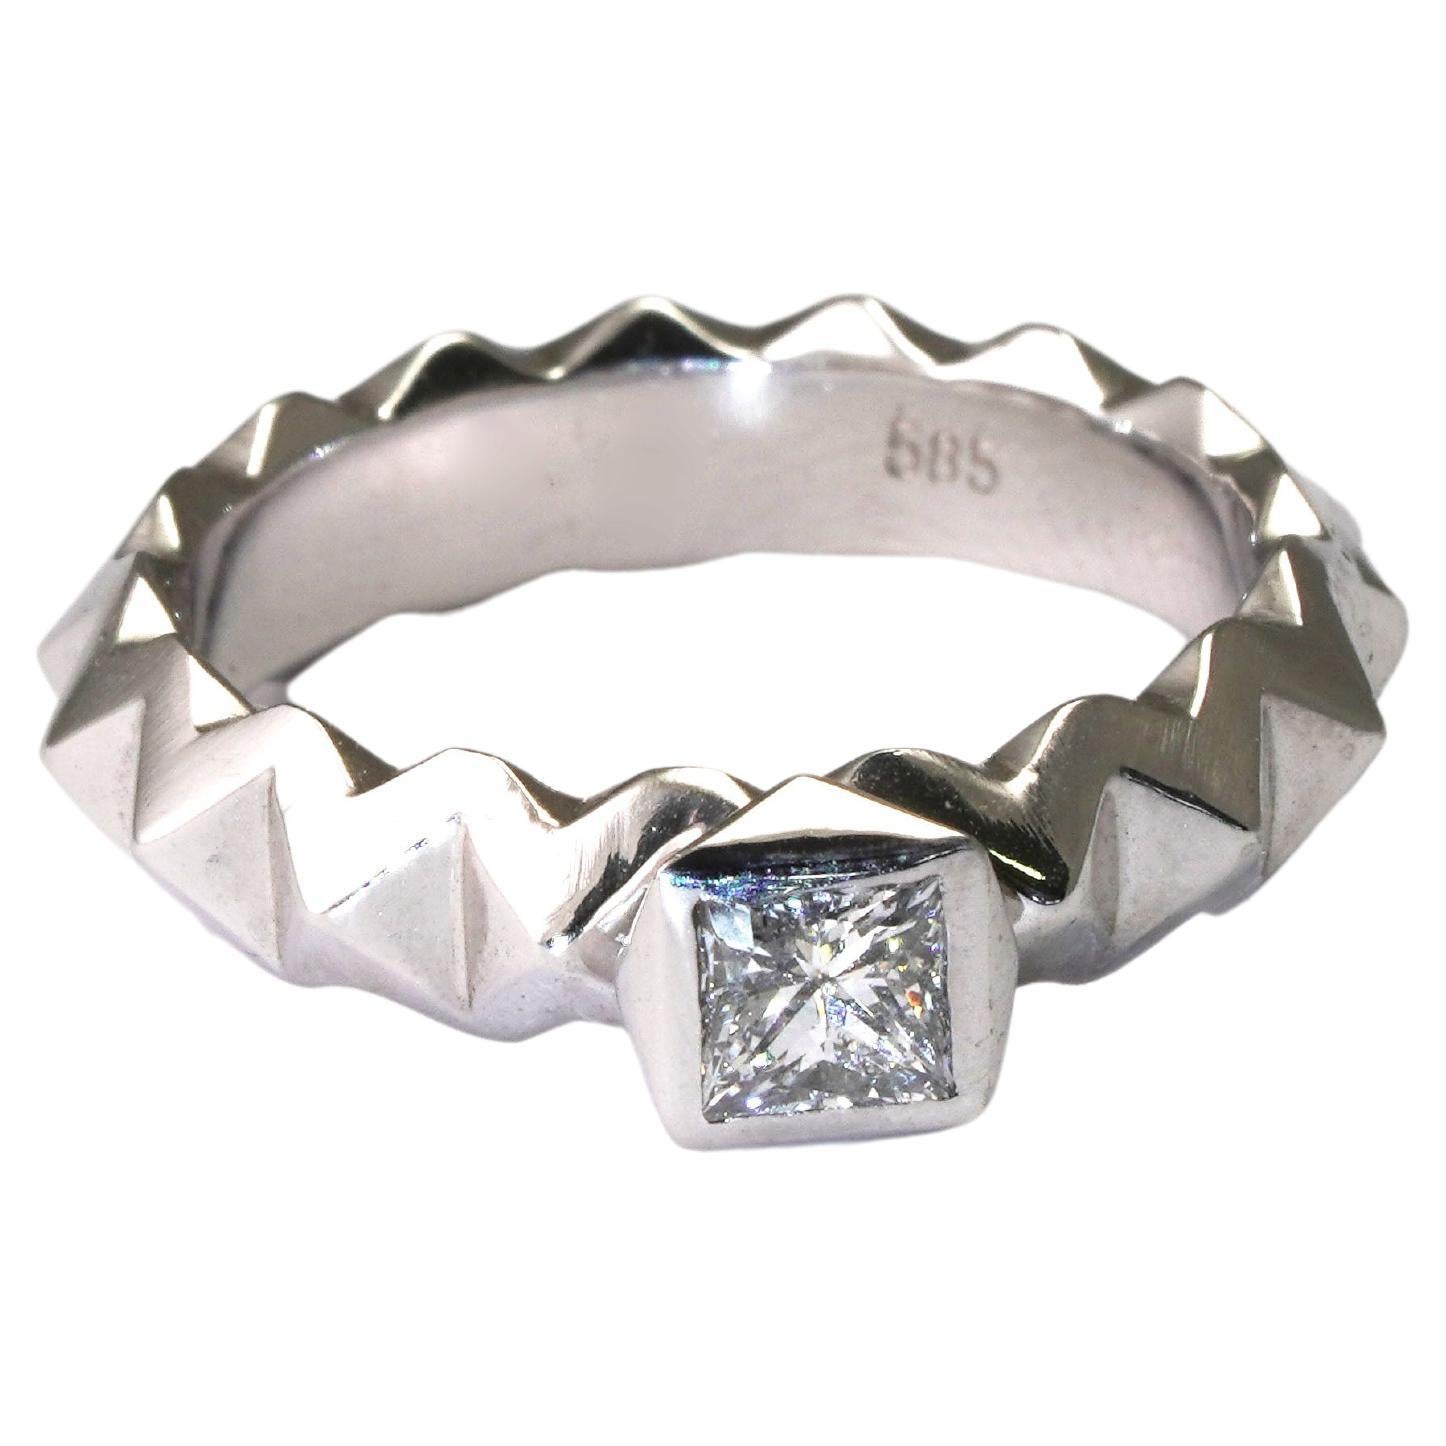 14 Karat White Gold Diamond Ring For Sale